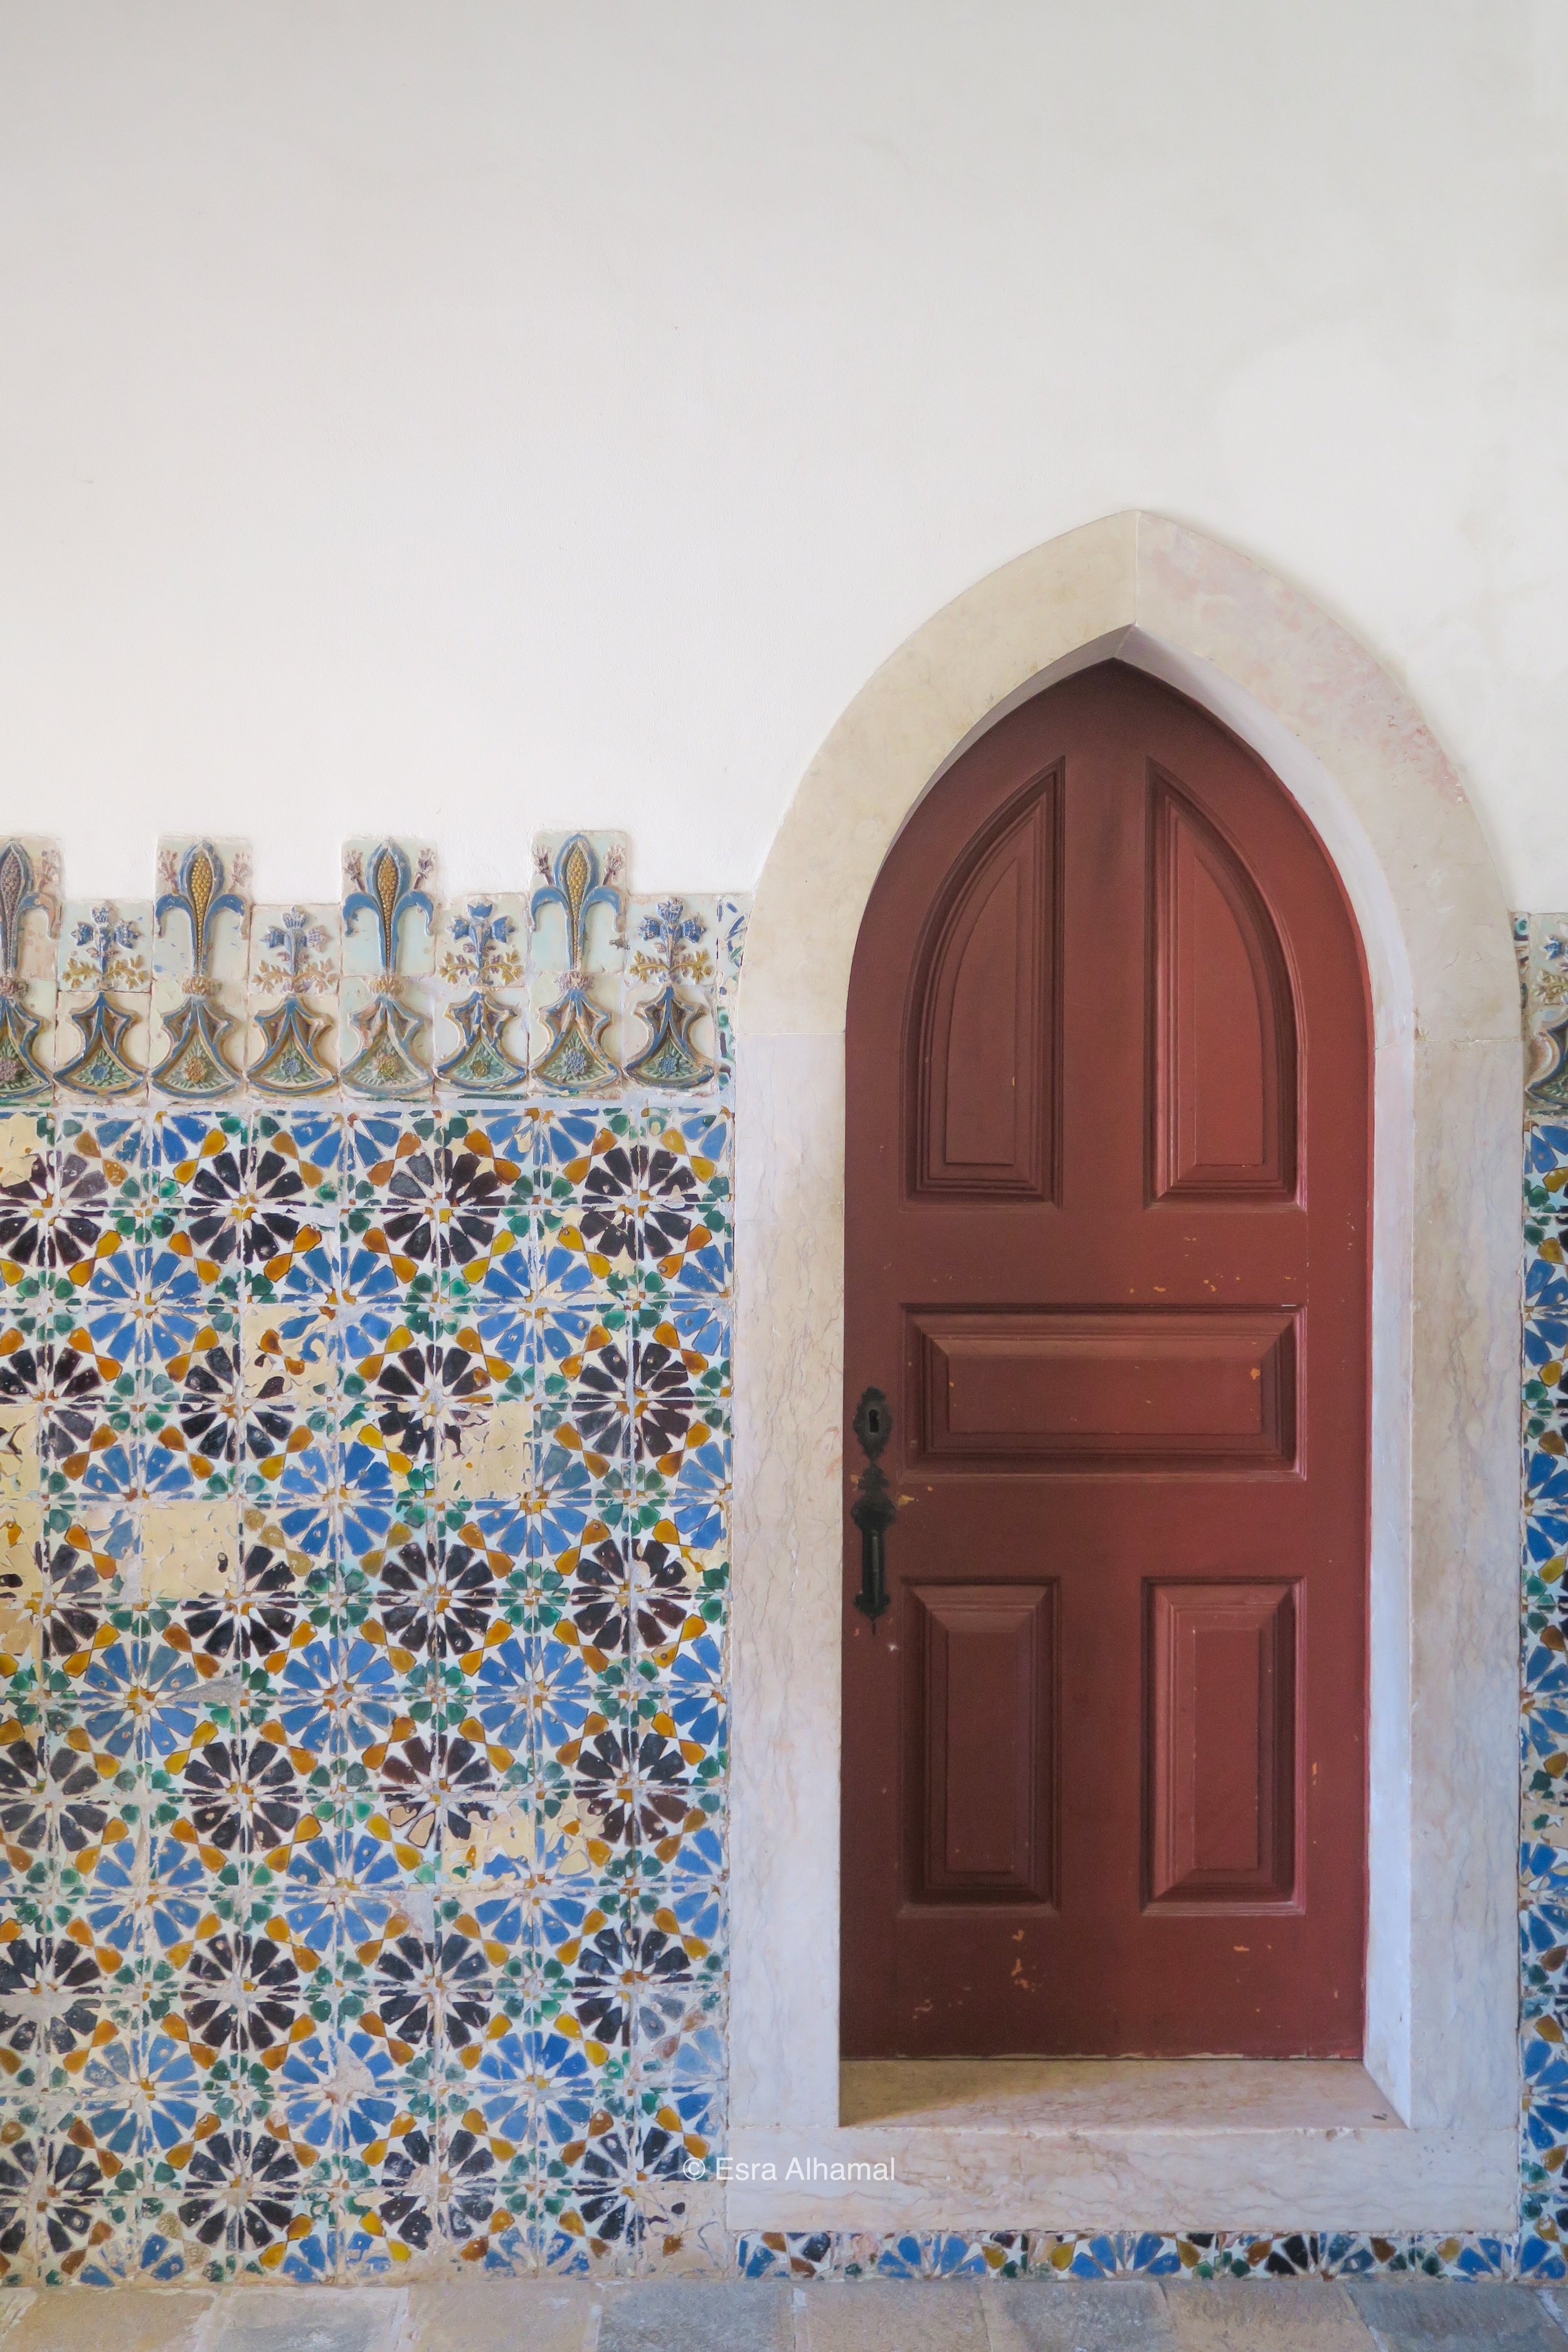 Geometric Islamic Patterns in Sintra Palace 